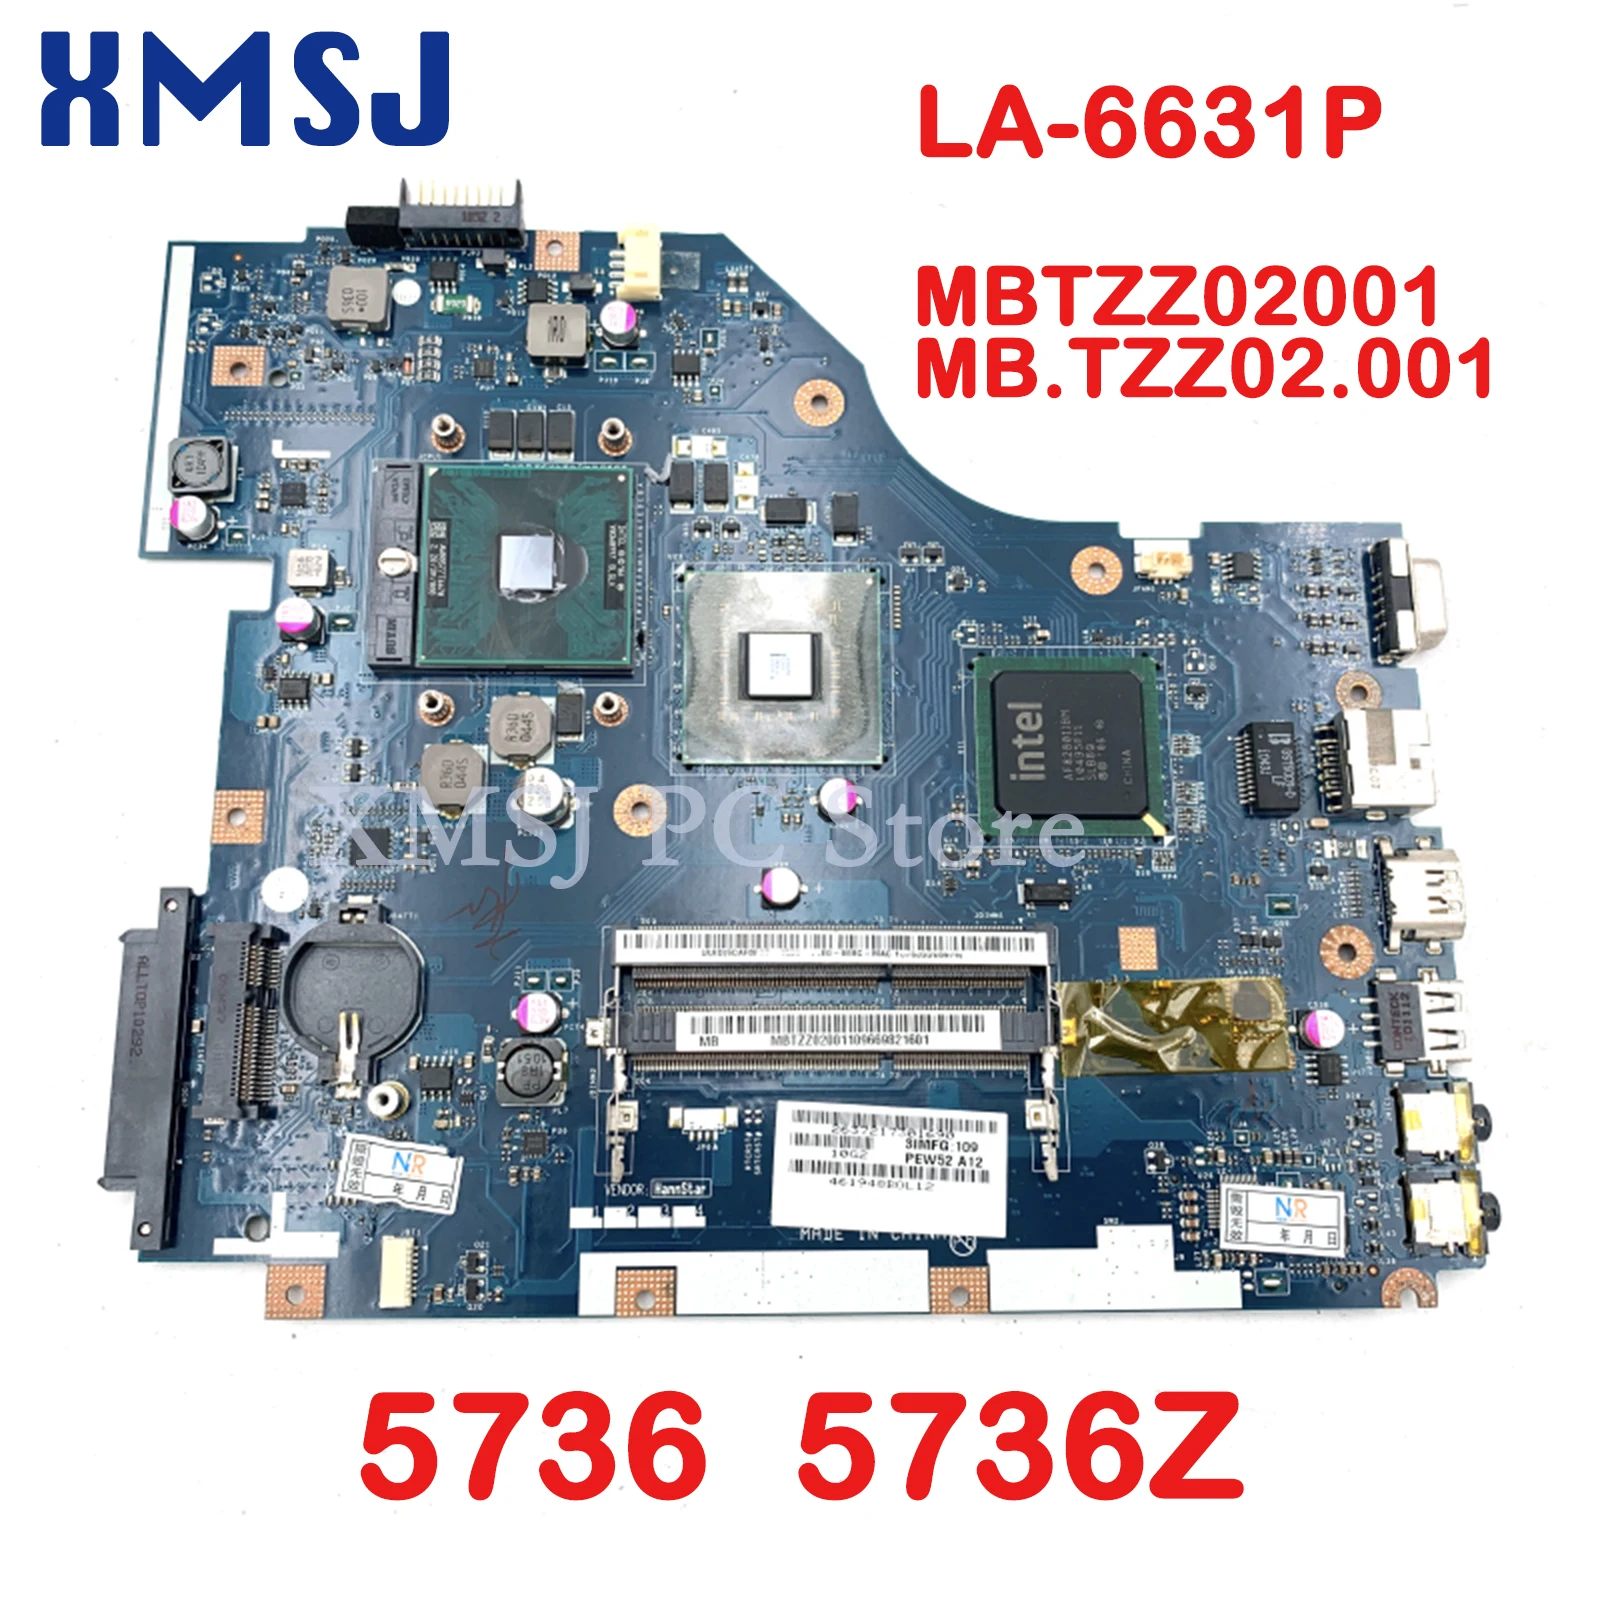 

XMSJ PEW72 LA-6631P MBTZZ02001 MB.TZZ02.001 For Acer aspire 5736 5736z Laptop motherboard GM45 DDR3 free CPU full test